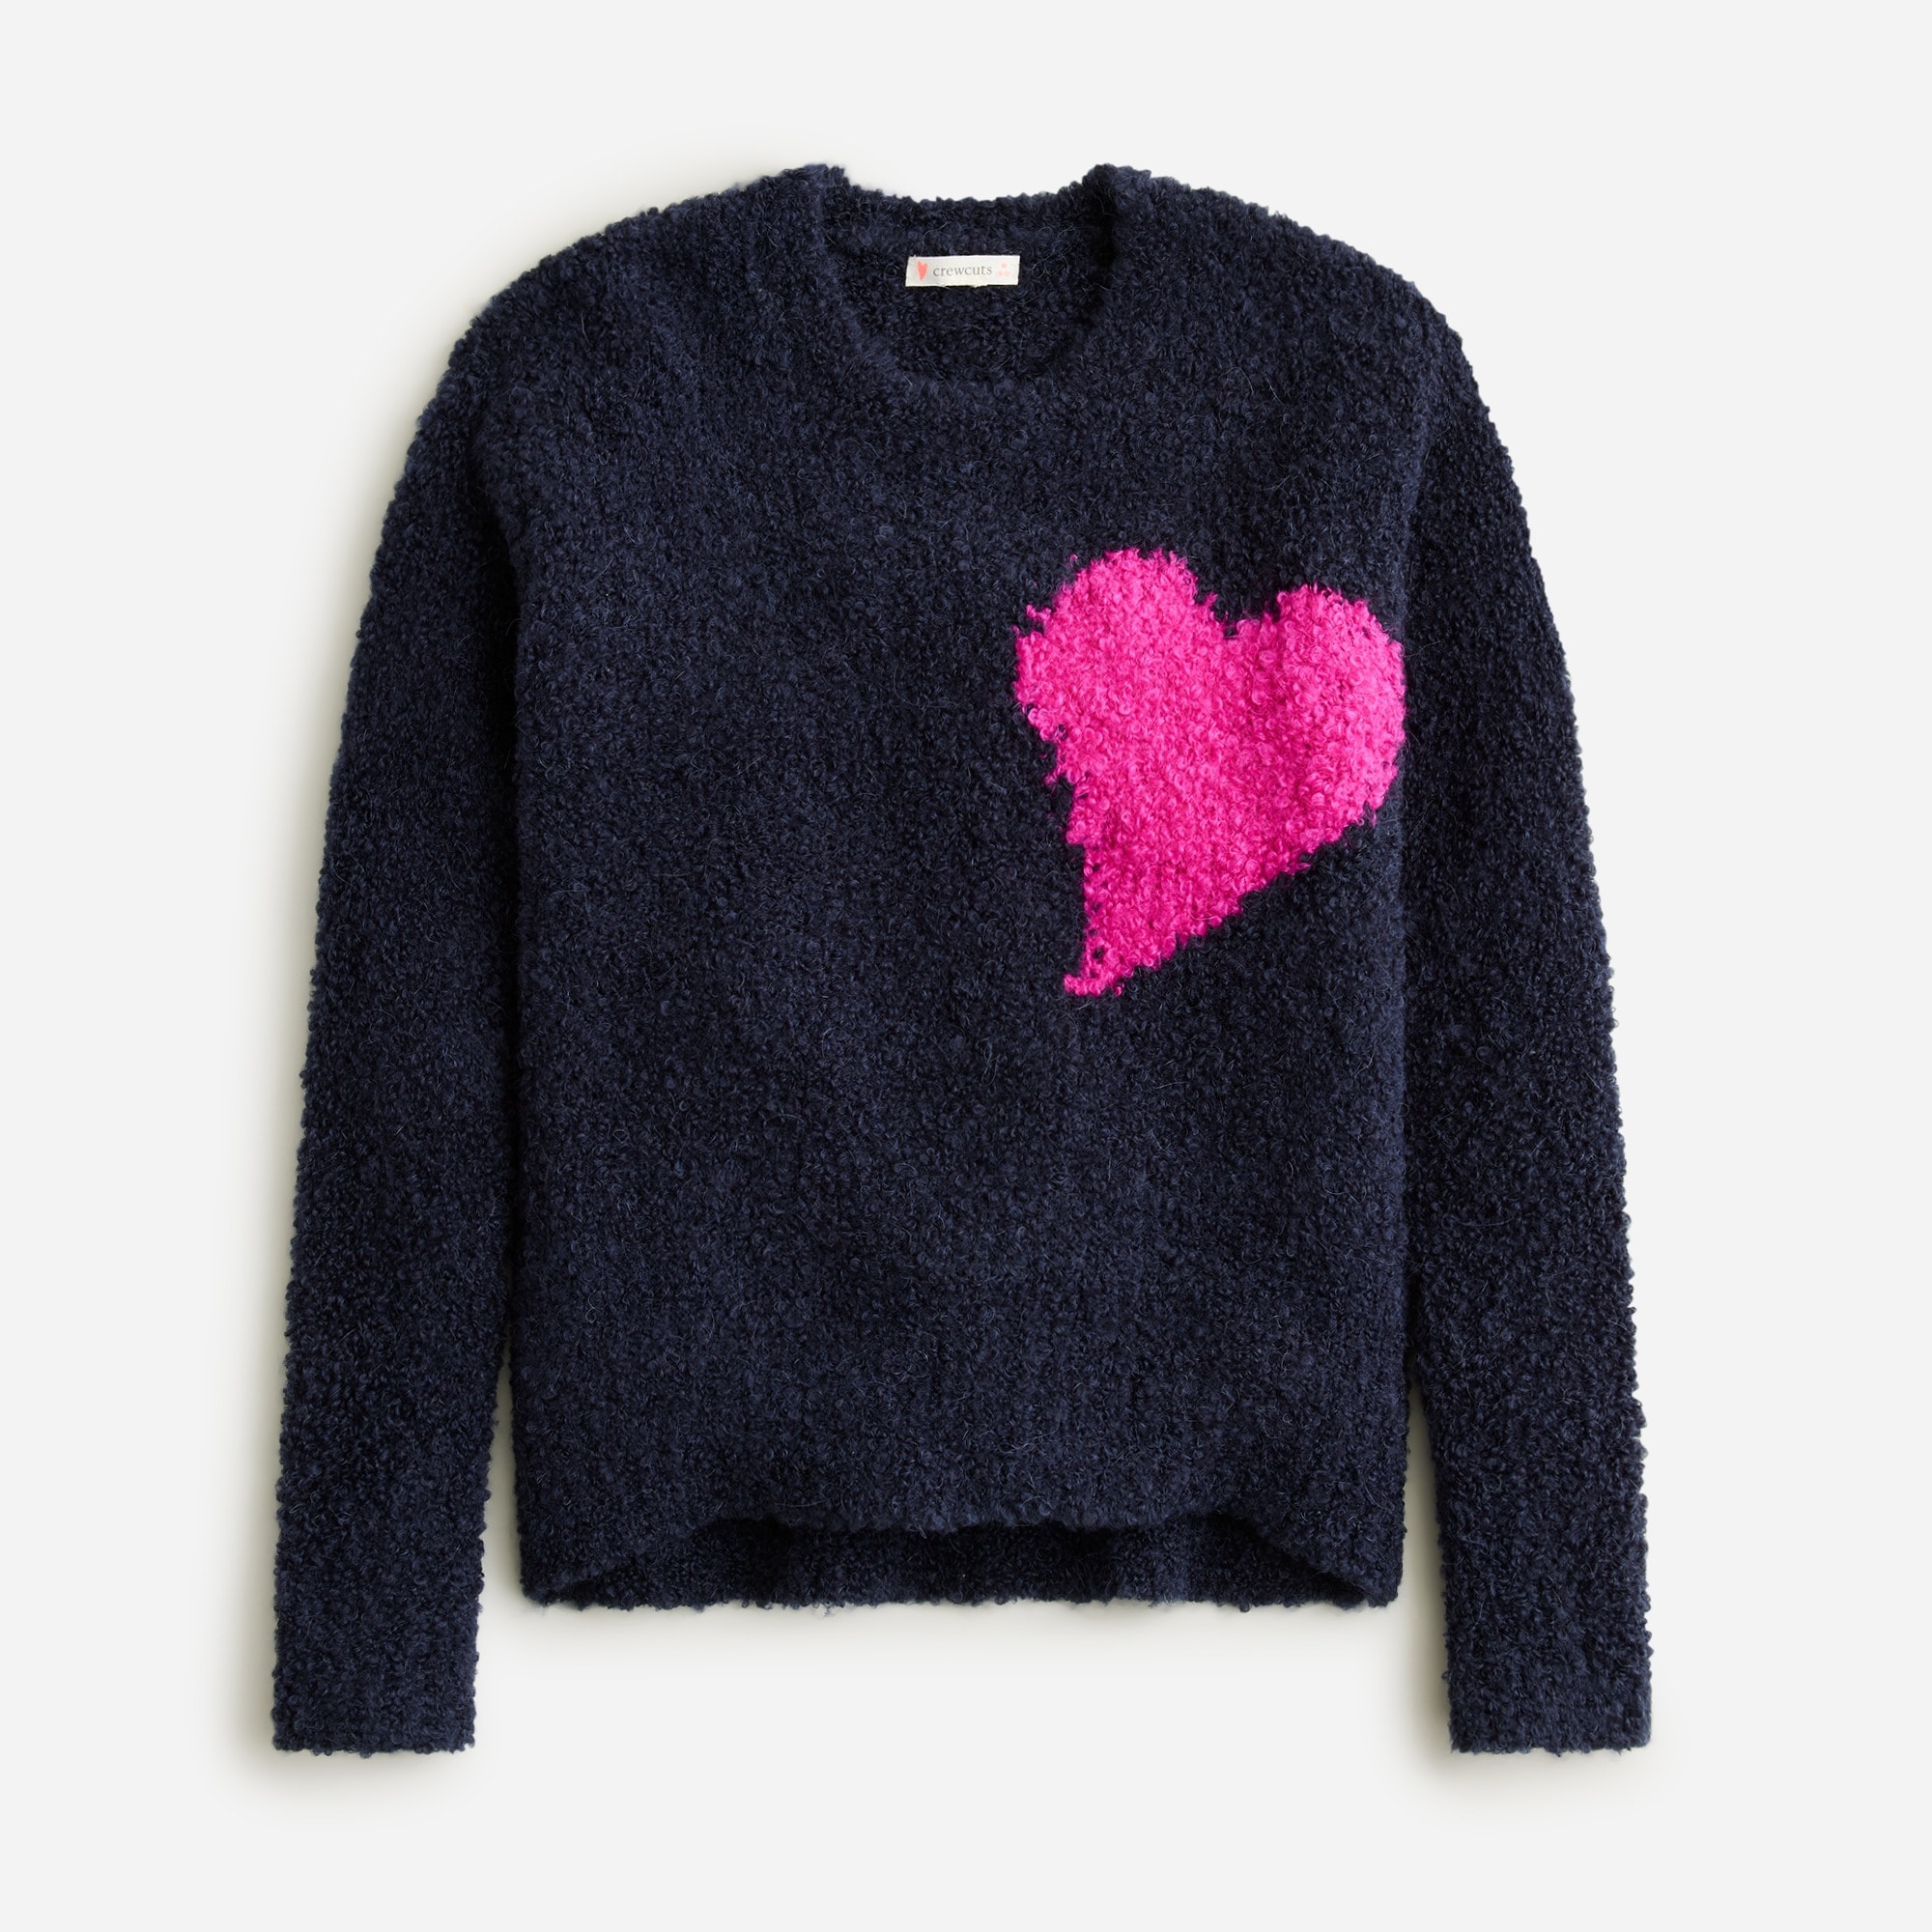  Girls' heart crewneck sweater in bubble yarn